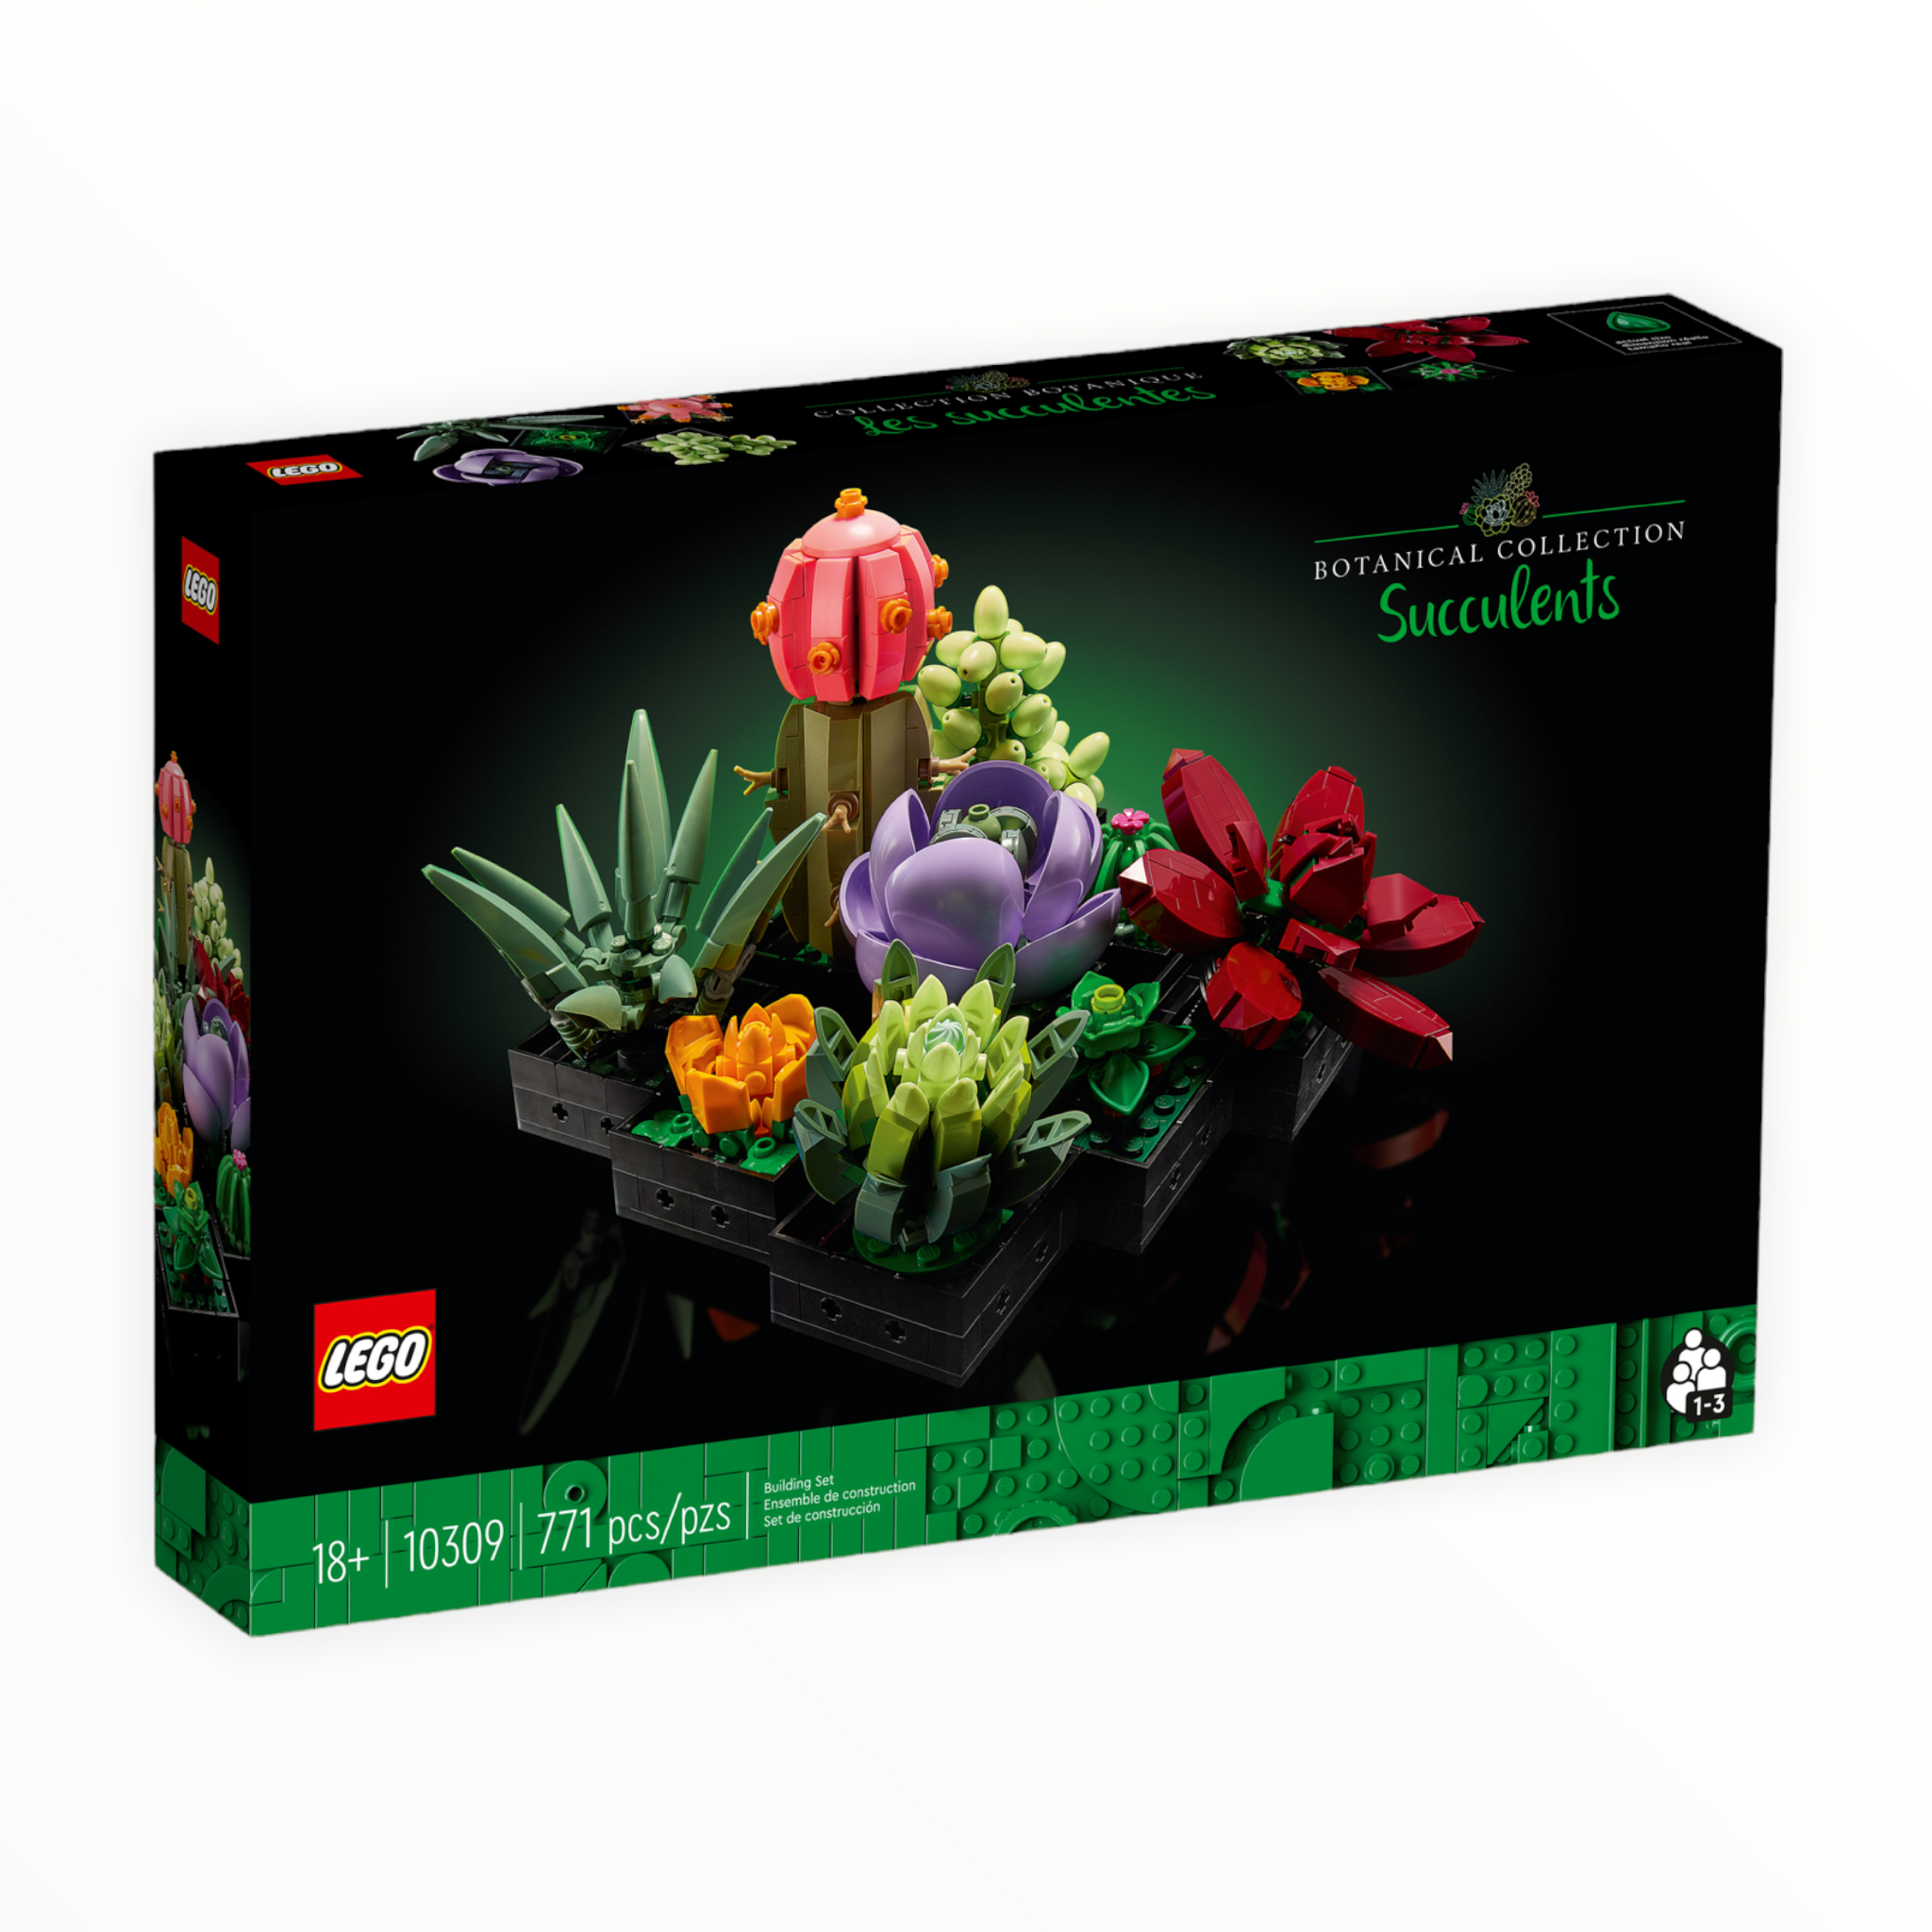 10309 Botanical Collection Succulents